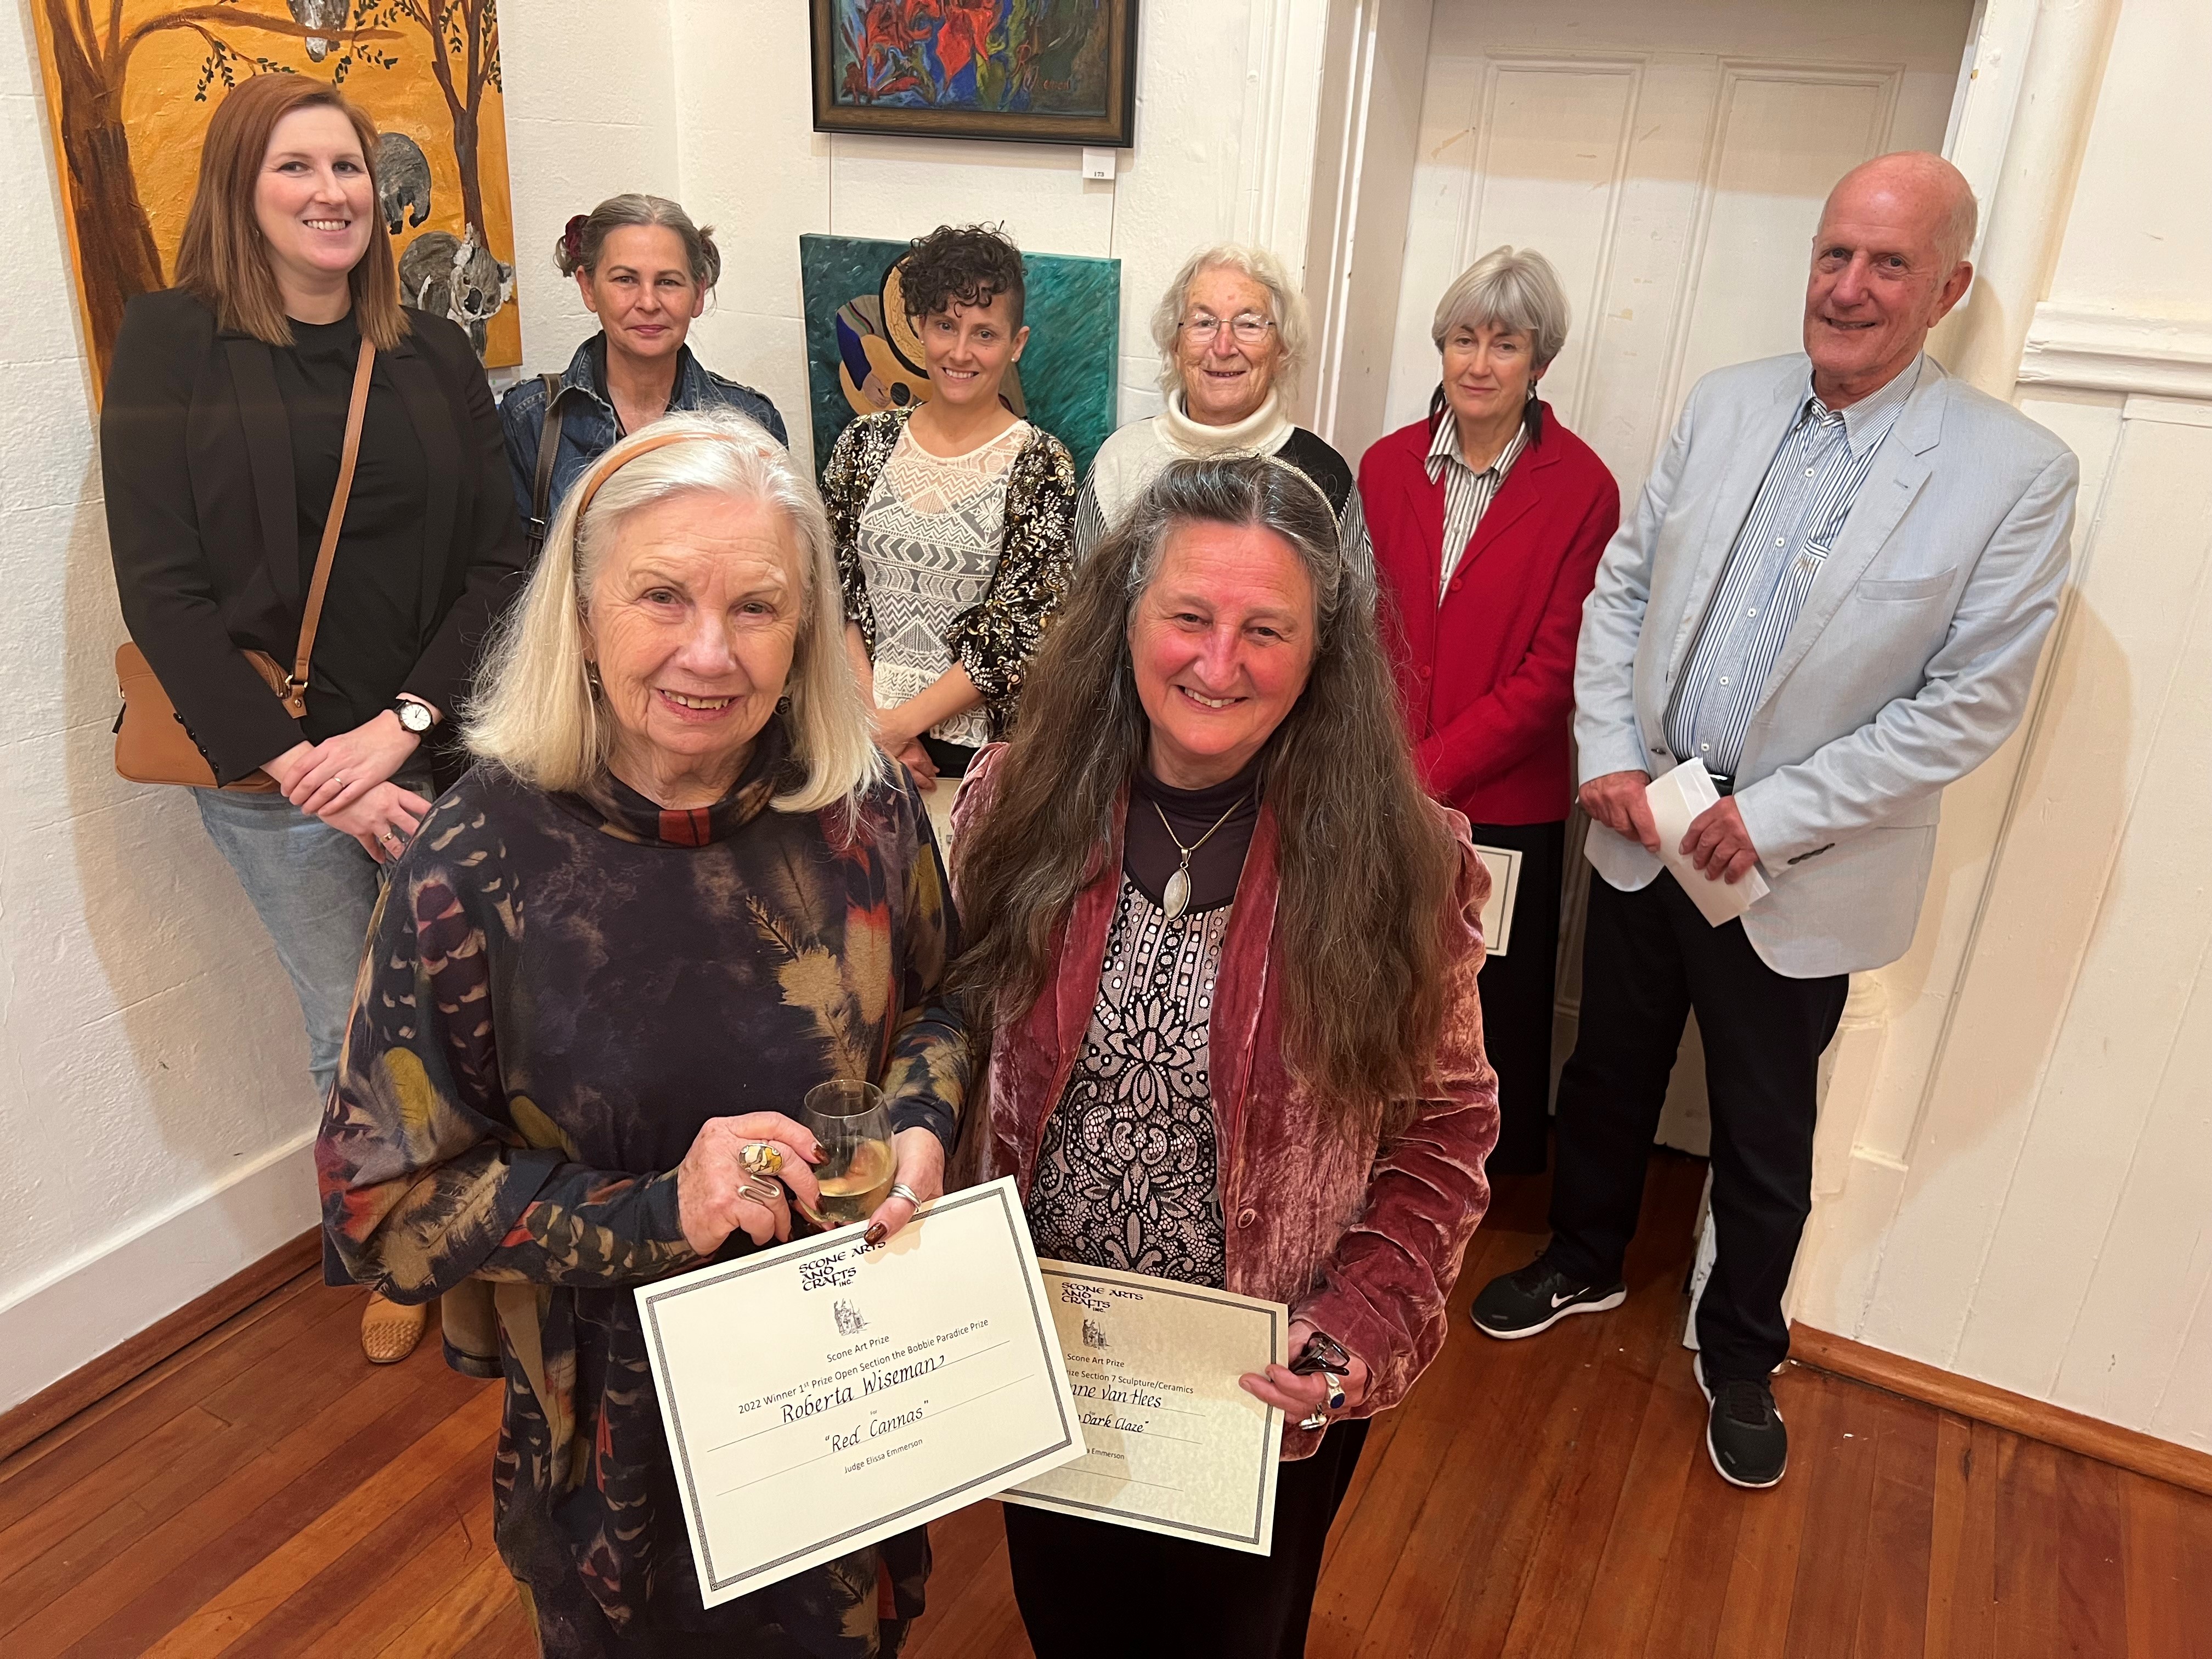 Roberta wins Scone Art Prize after long wait